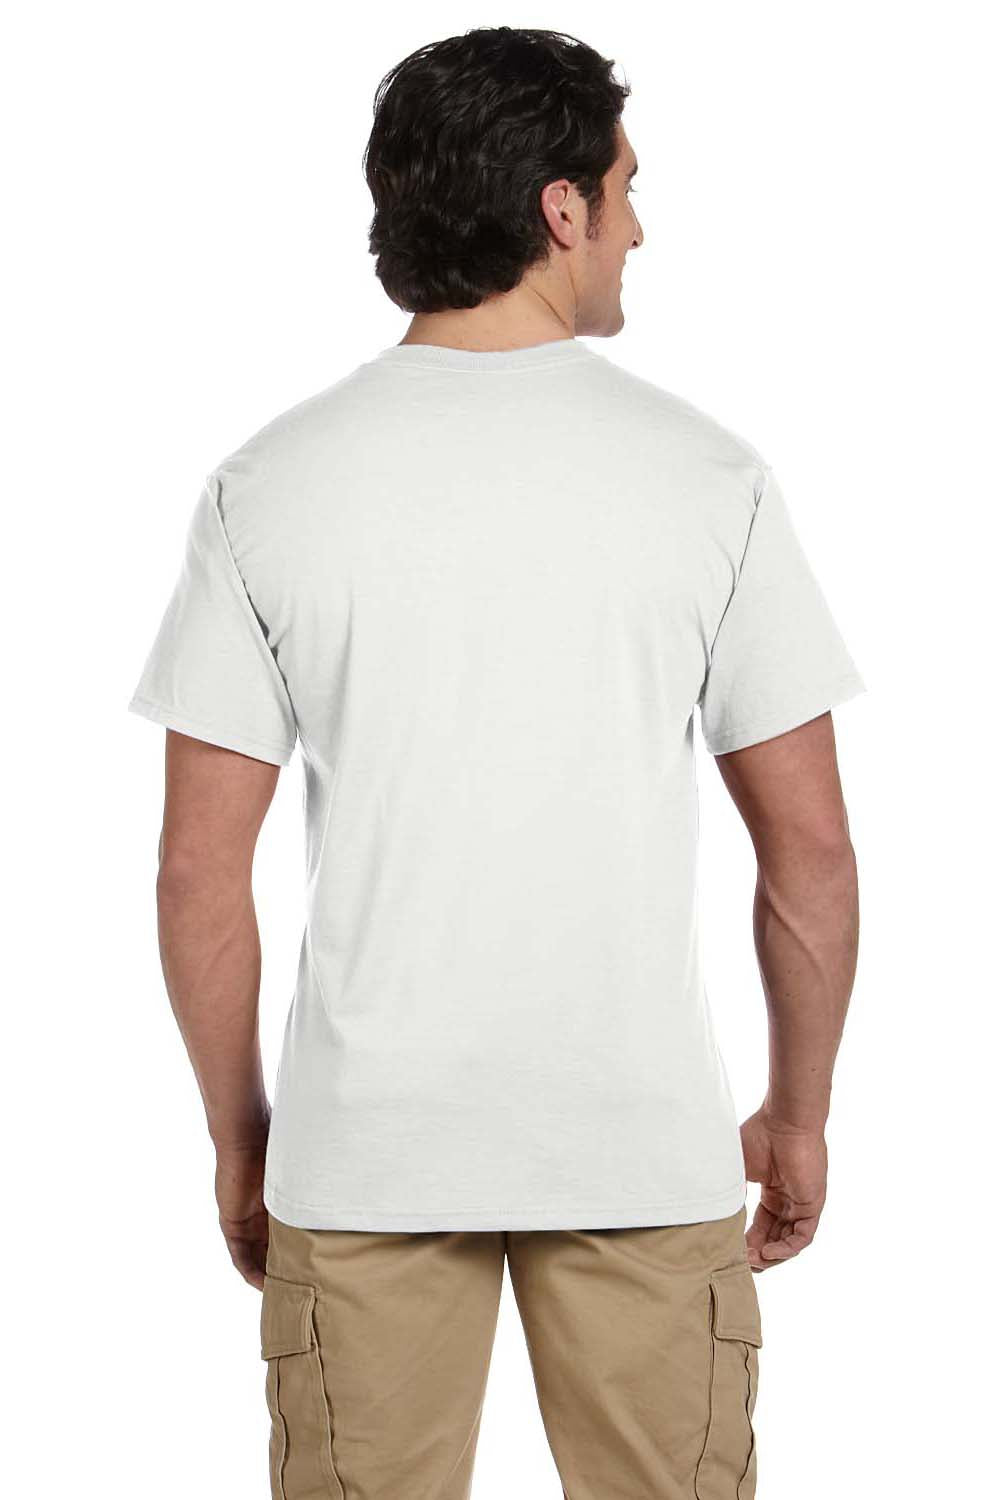 Jerzees 29P Mens Dri-Power Moisture Wicking Short Sleeve Crewneck T-Shirt w/ Pocket White Back